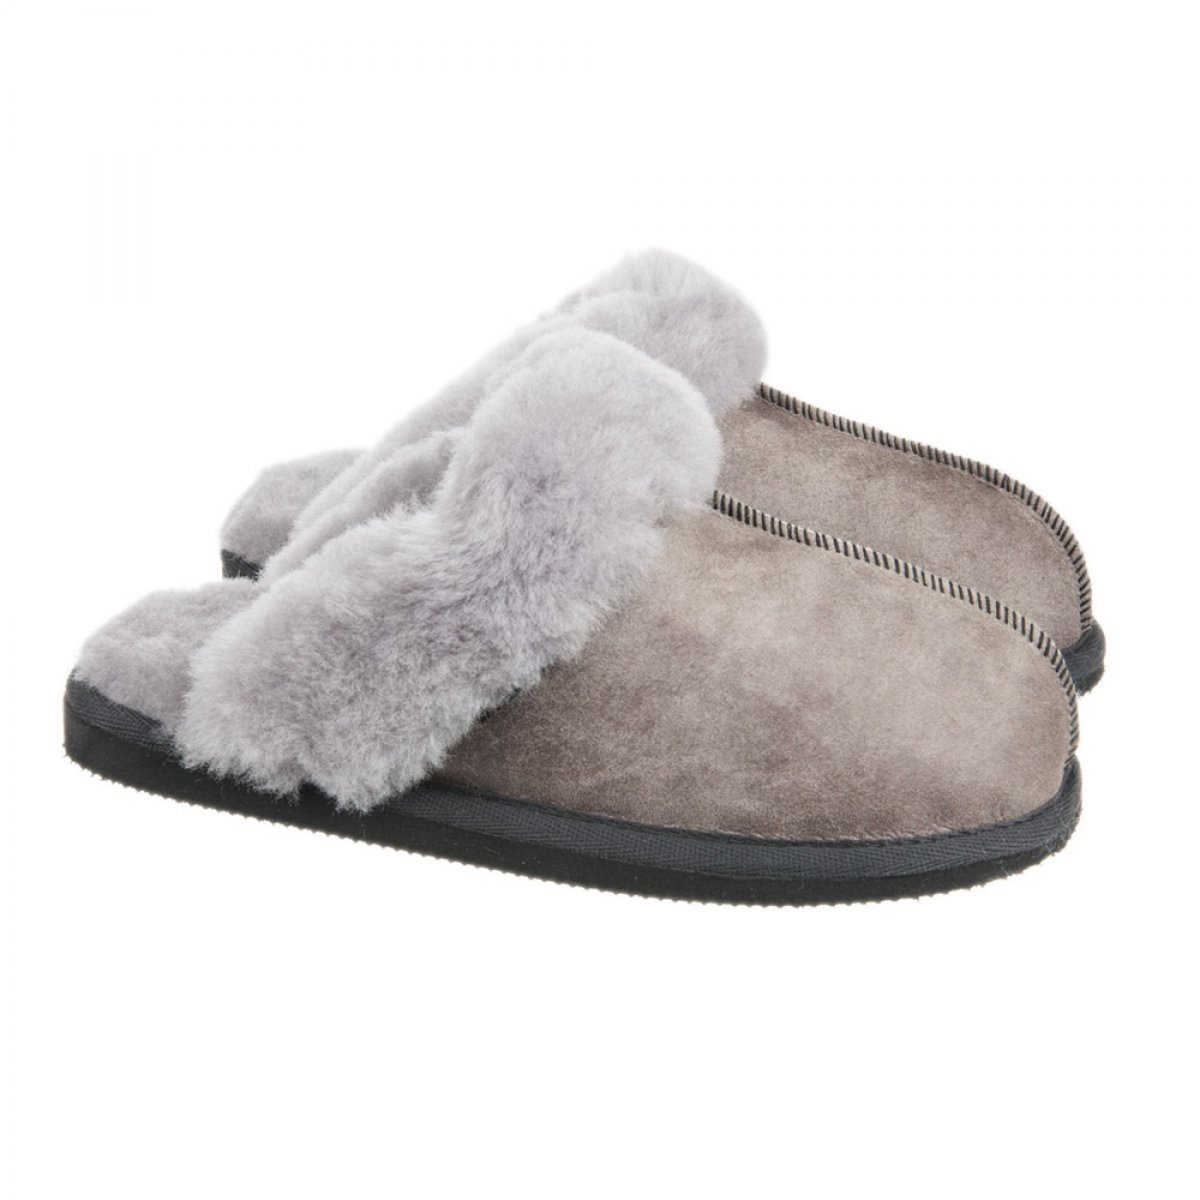 SHEPHERD slippers Jessica made in sweden